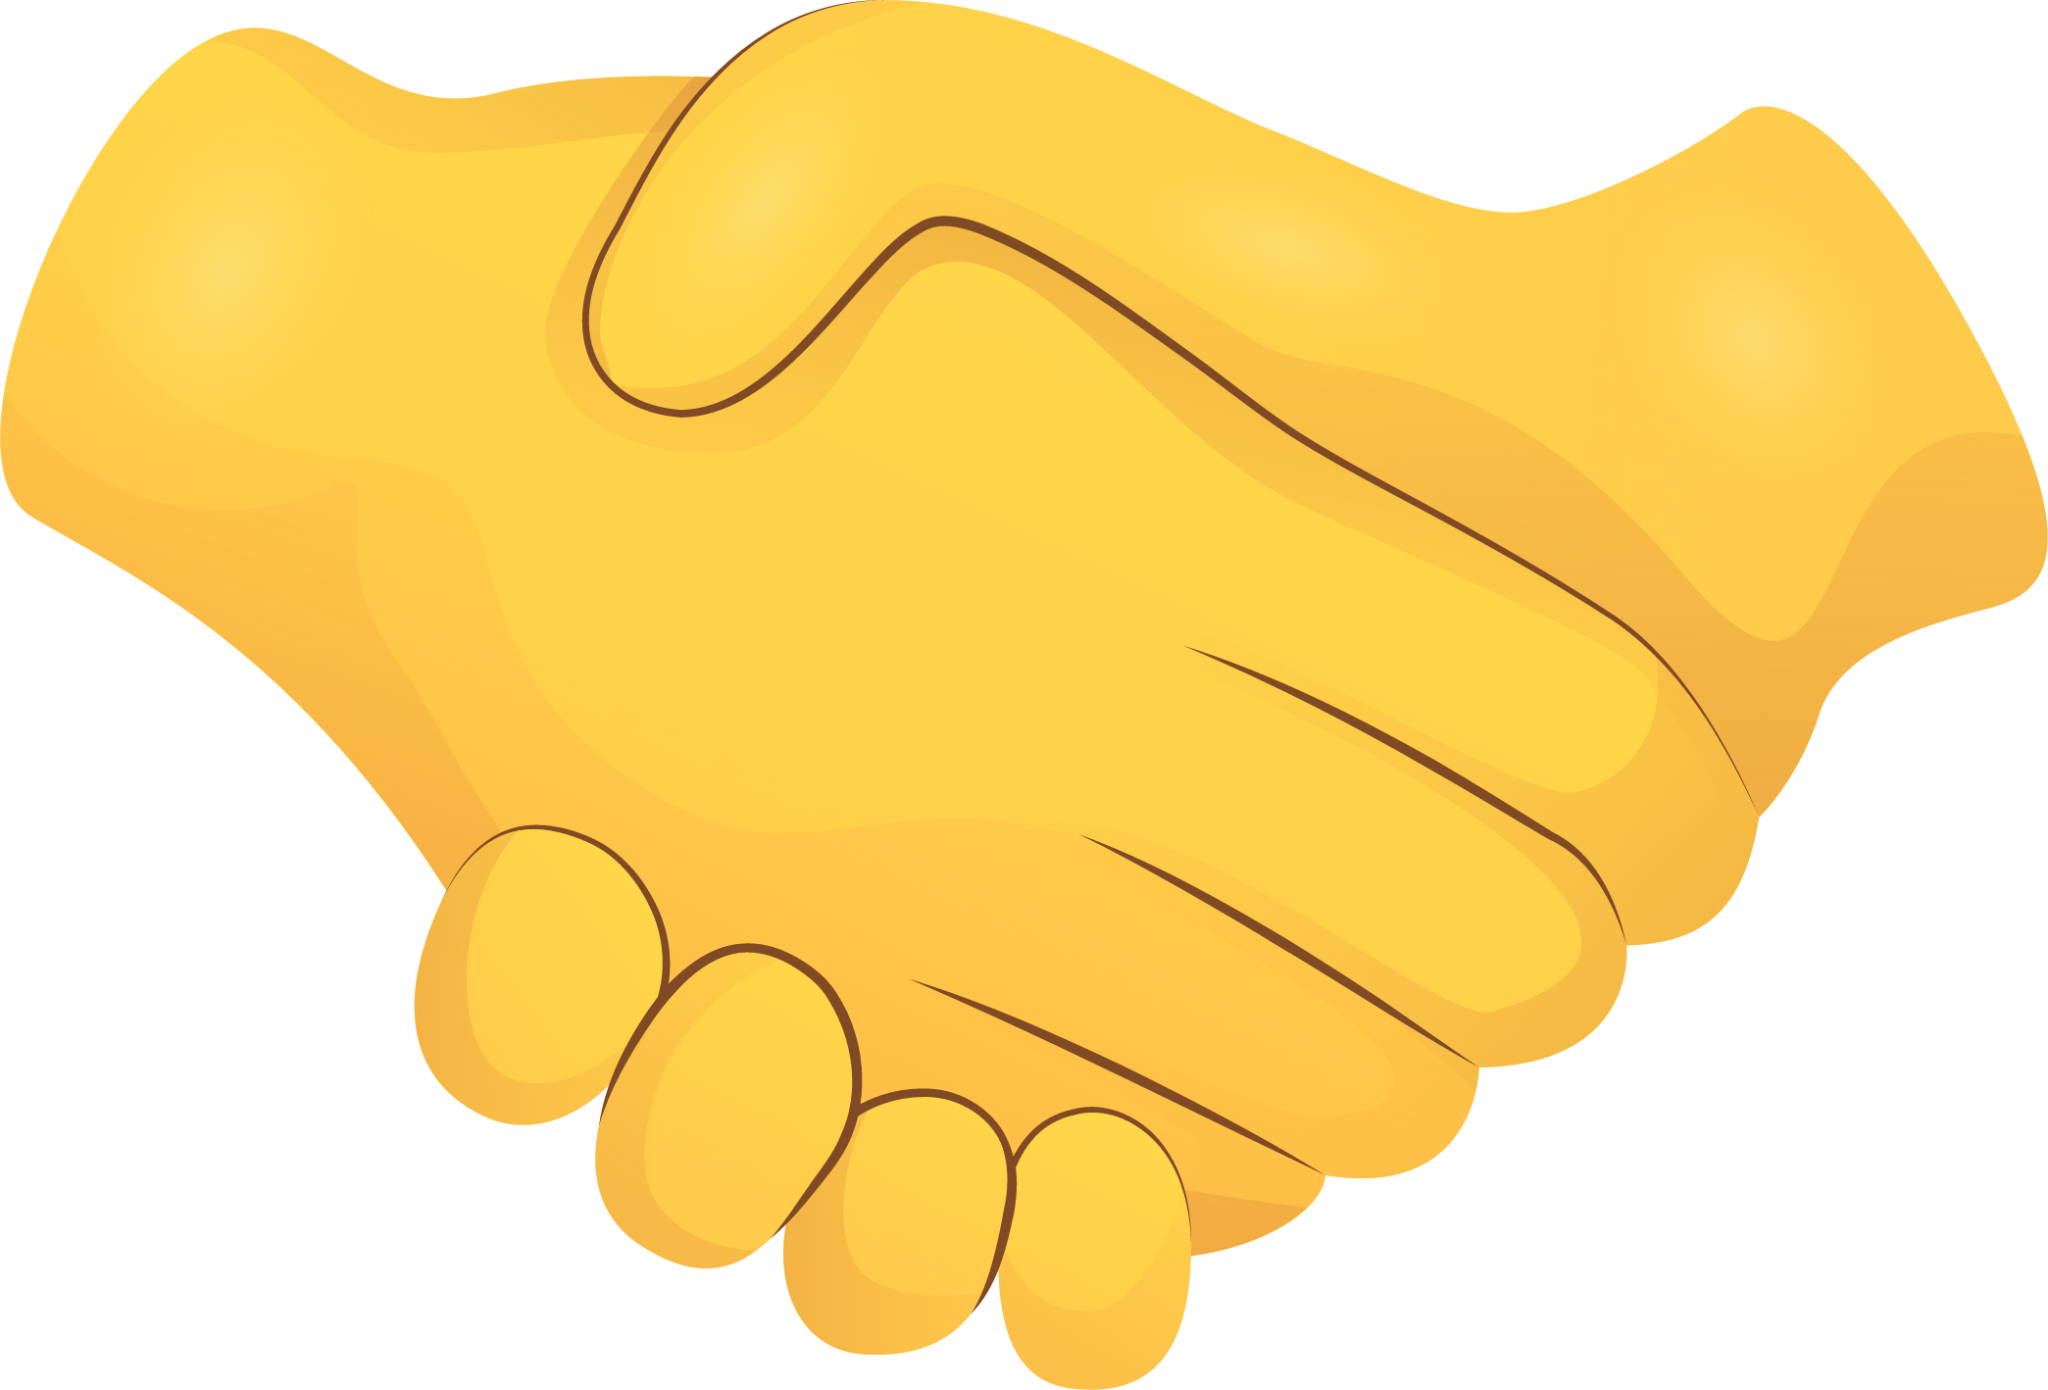 16,000+ Handshake Emoji Pictures